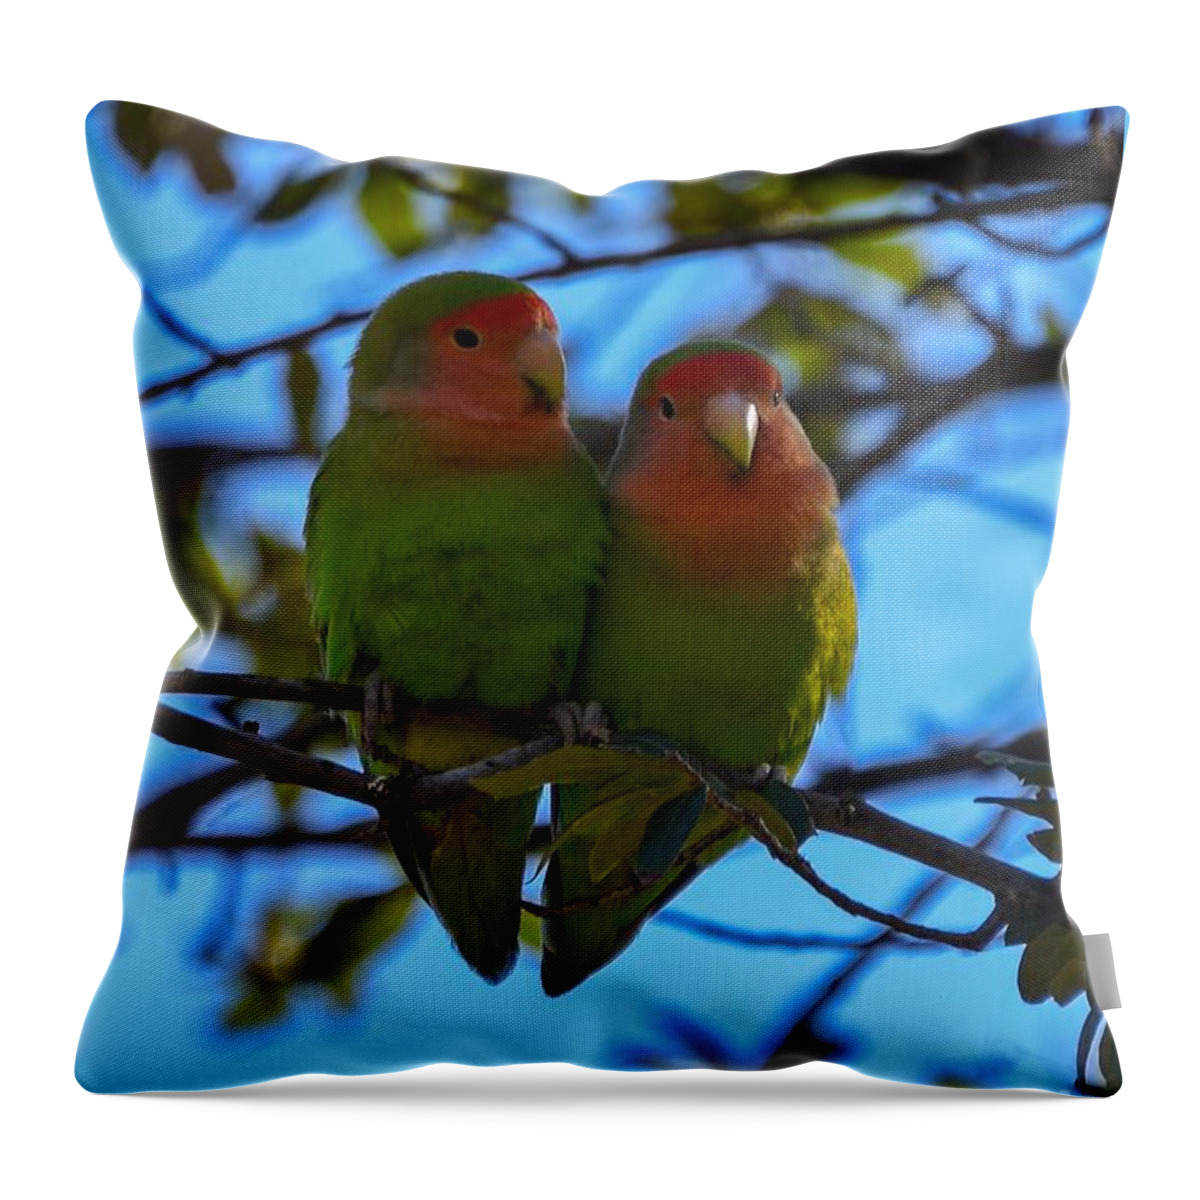 Wild Lovebirds Throw Pillow featuring the digital art Wild Lovebirds by Tammy Keyes